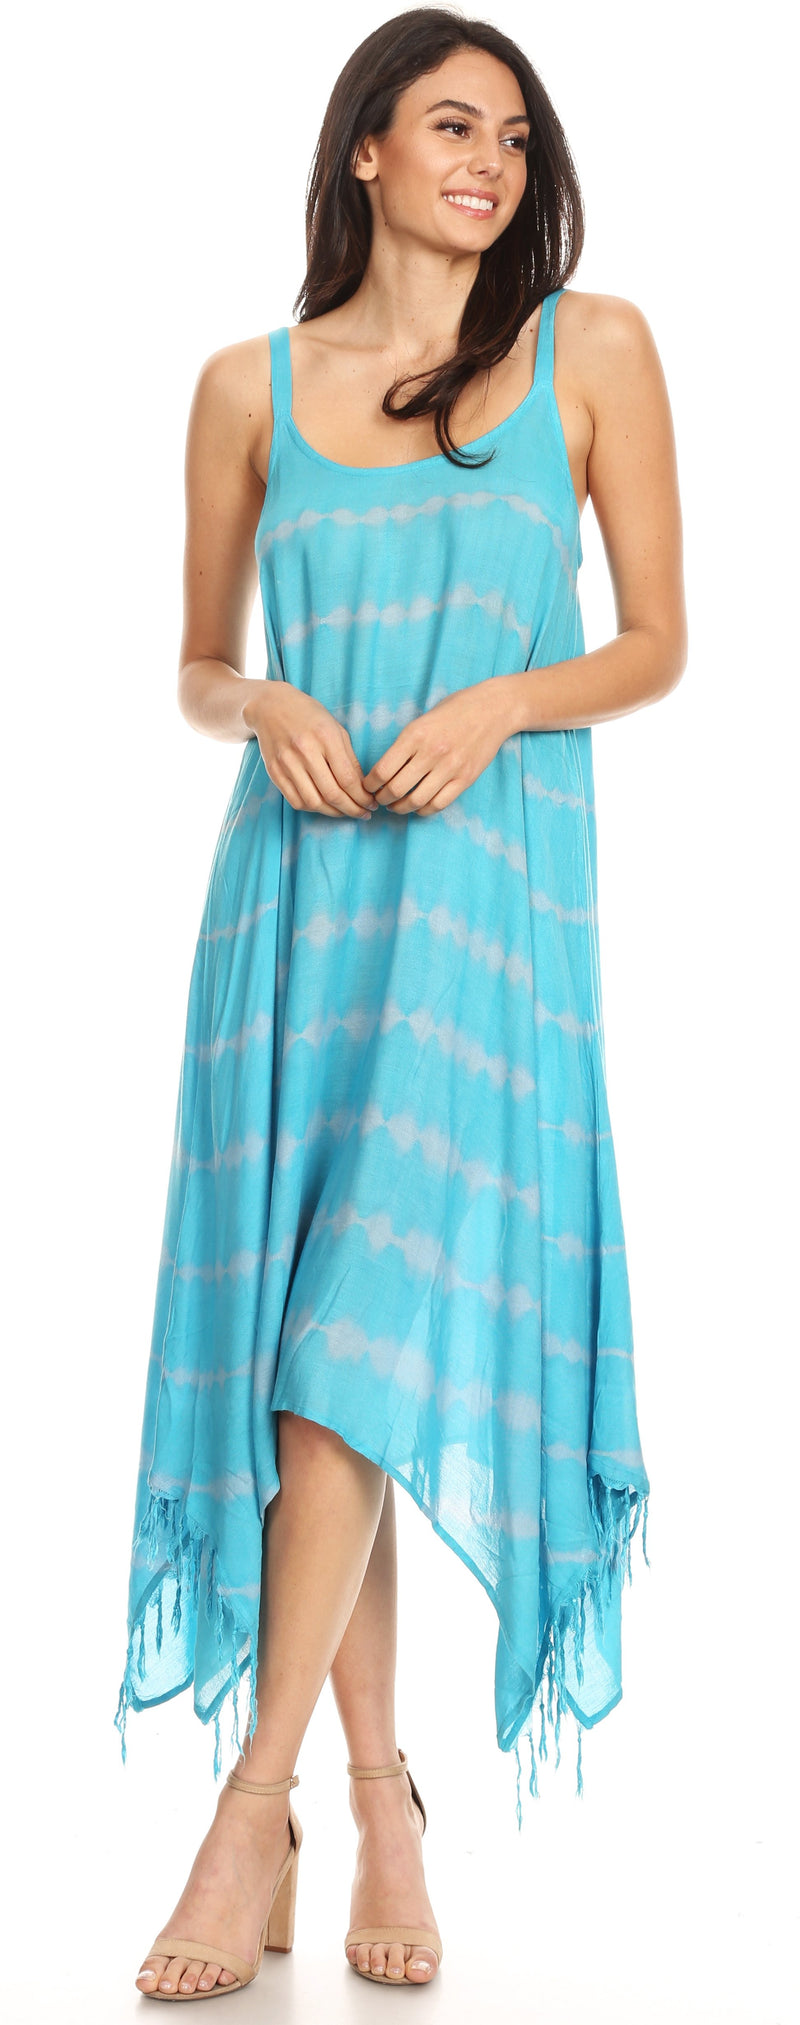 Sakkas Lorella Women's Spaghetti Strap Casual Summer Sleeveless Dress